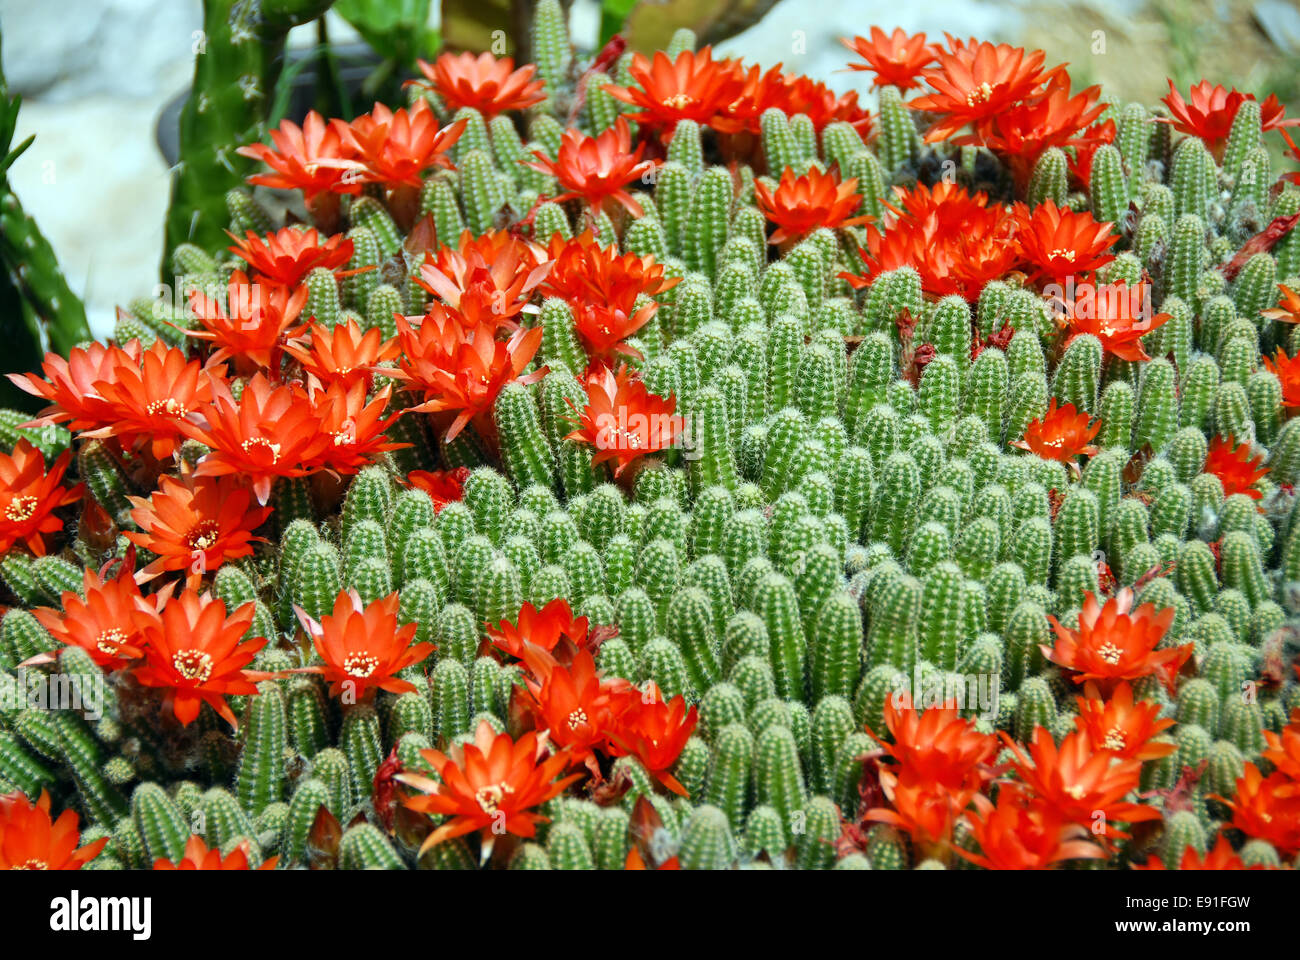 Cactus red flowers Stock Photo